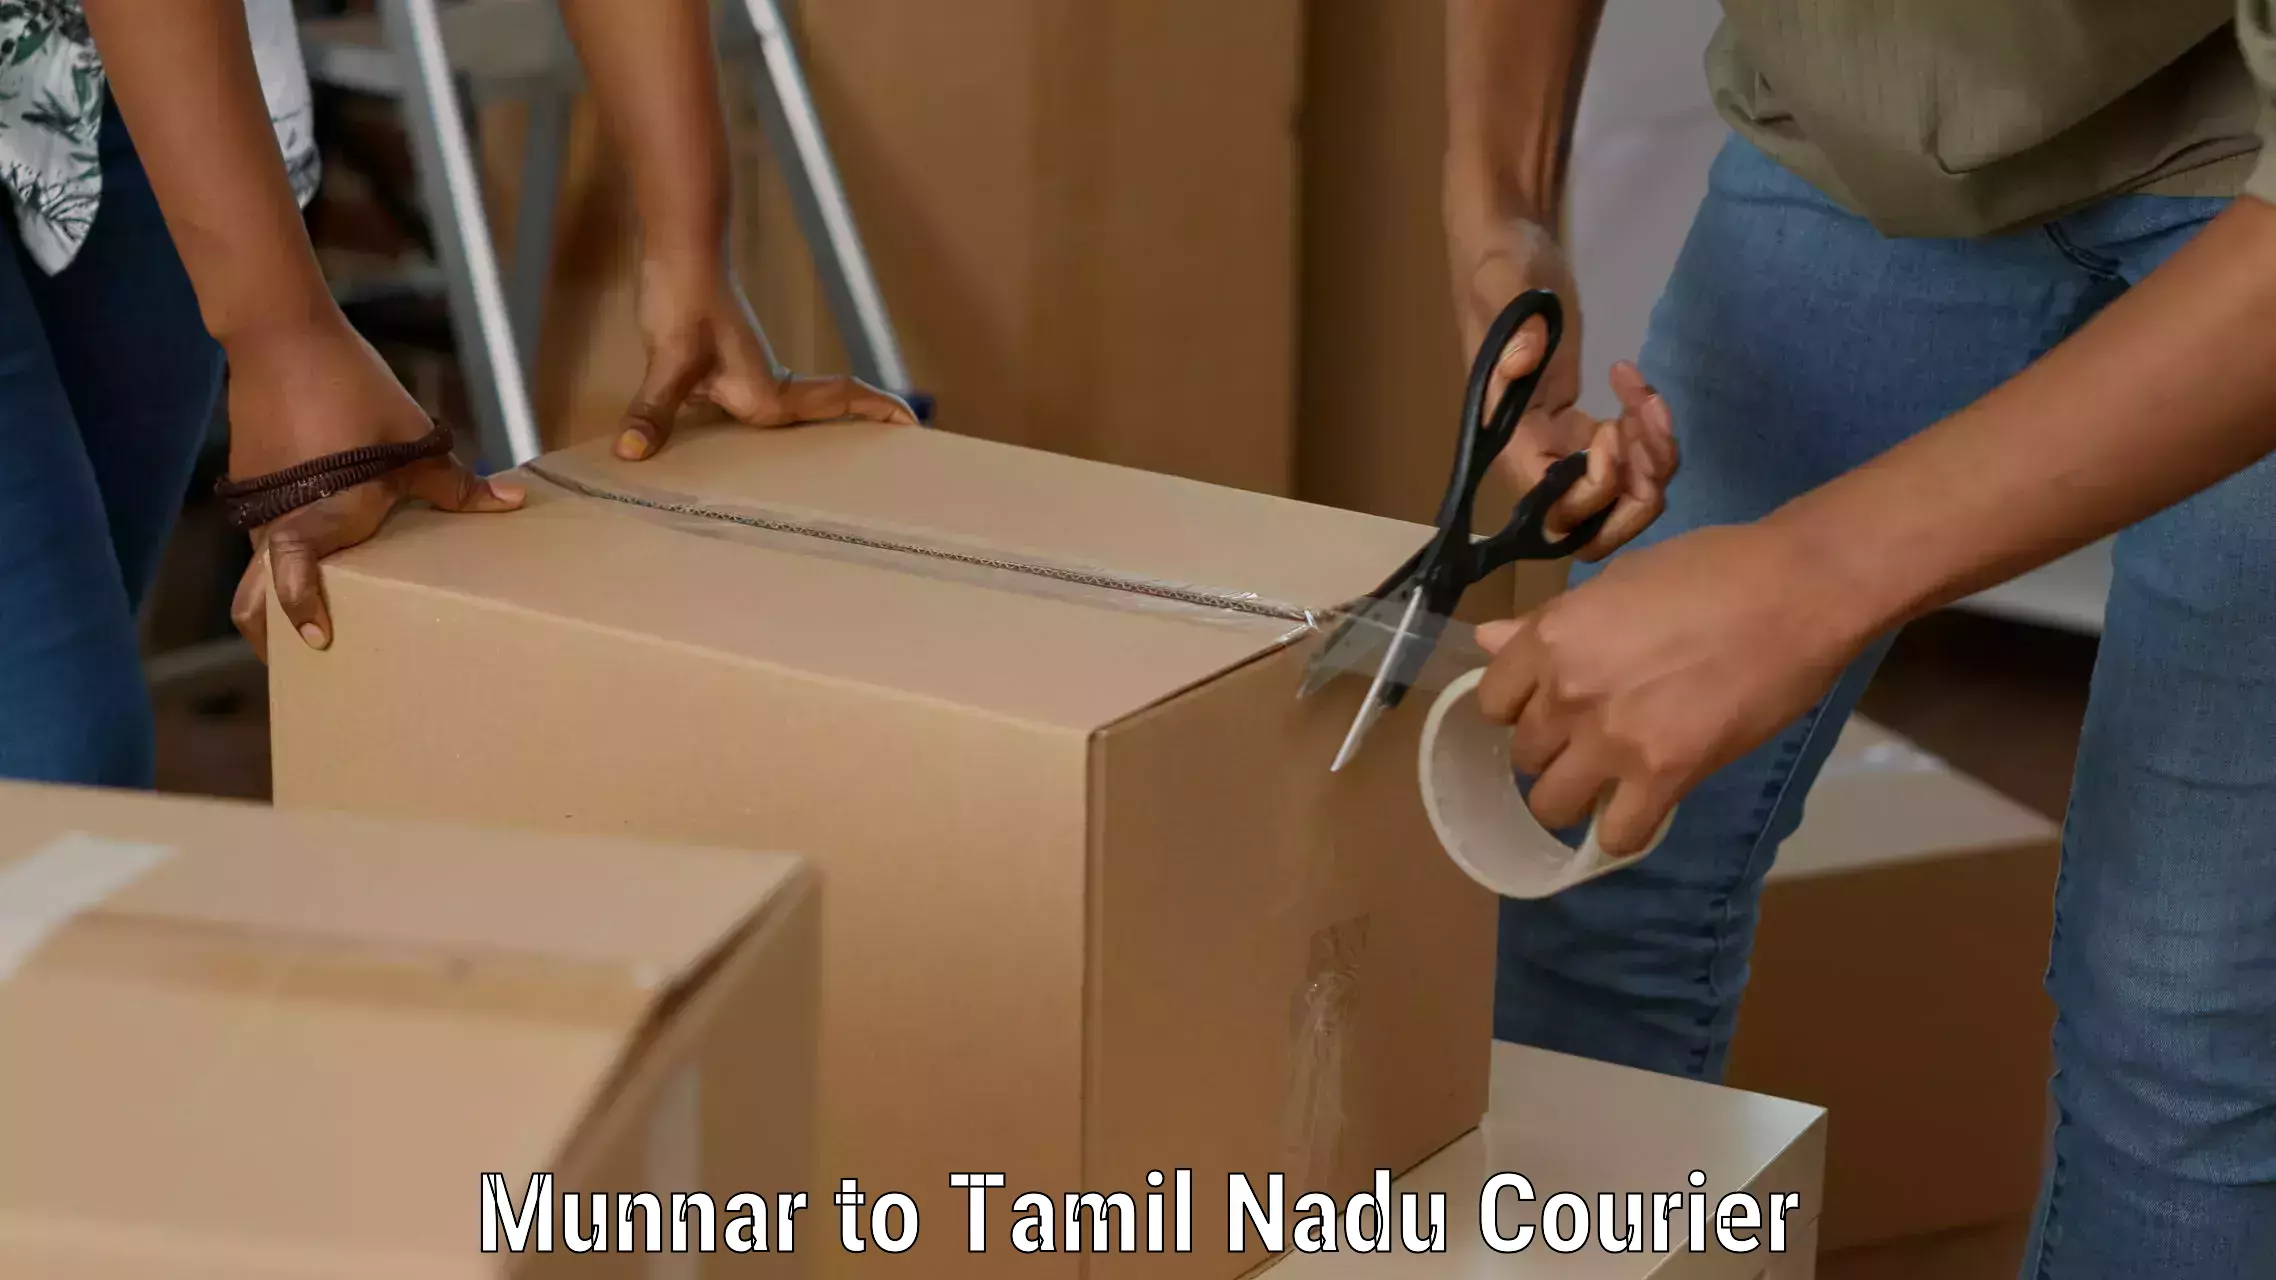 Courier service comparison Munnar to Sivakasi